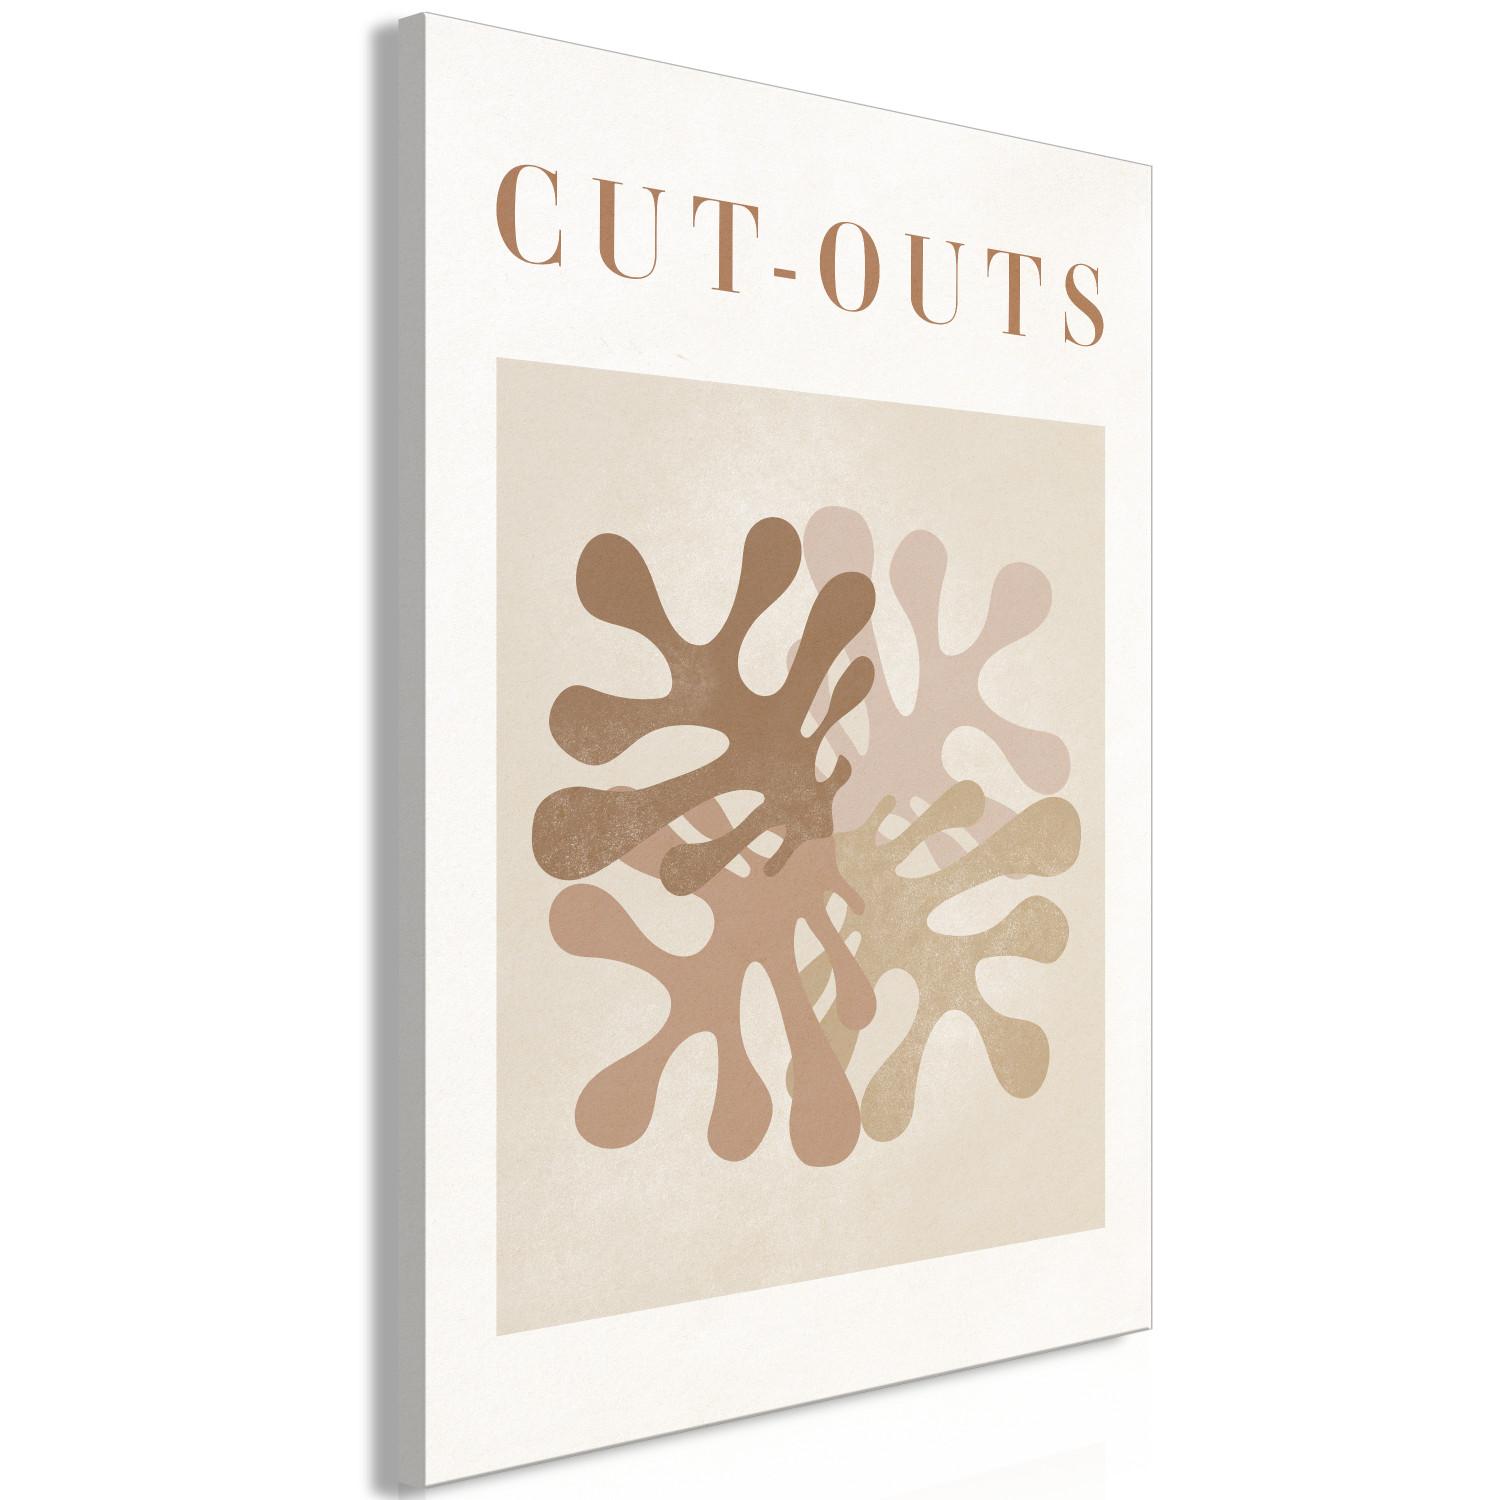 Cuadro moderno Cutouts - Abstract Shapes Suggesting Vegetation